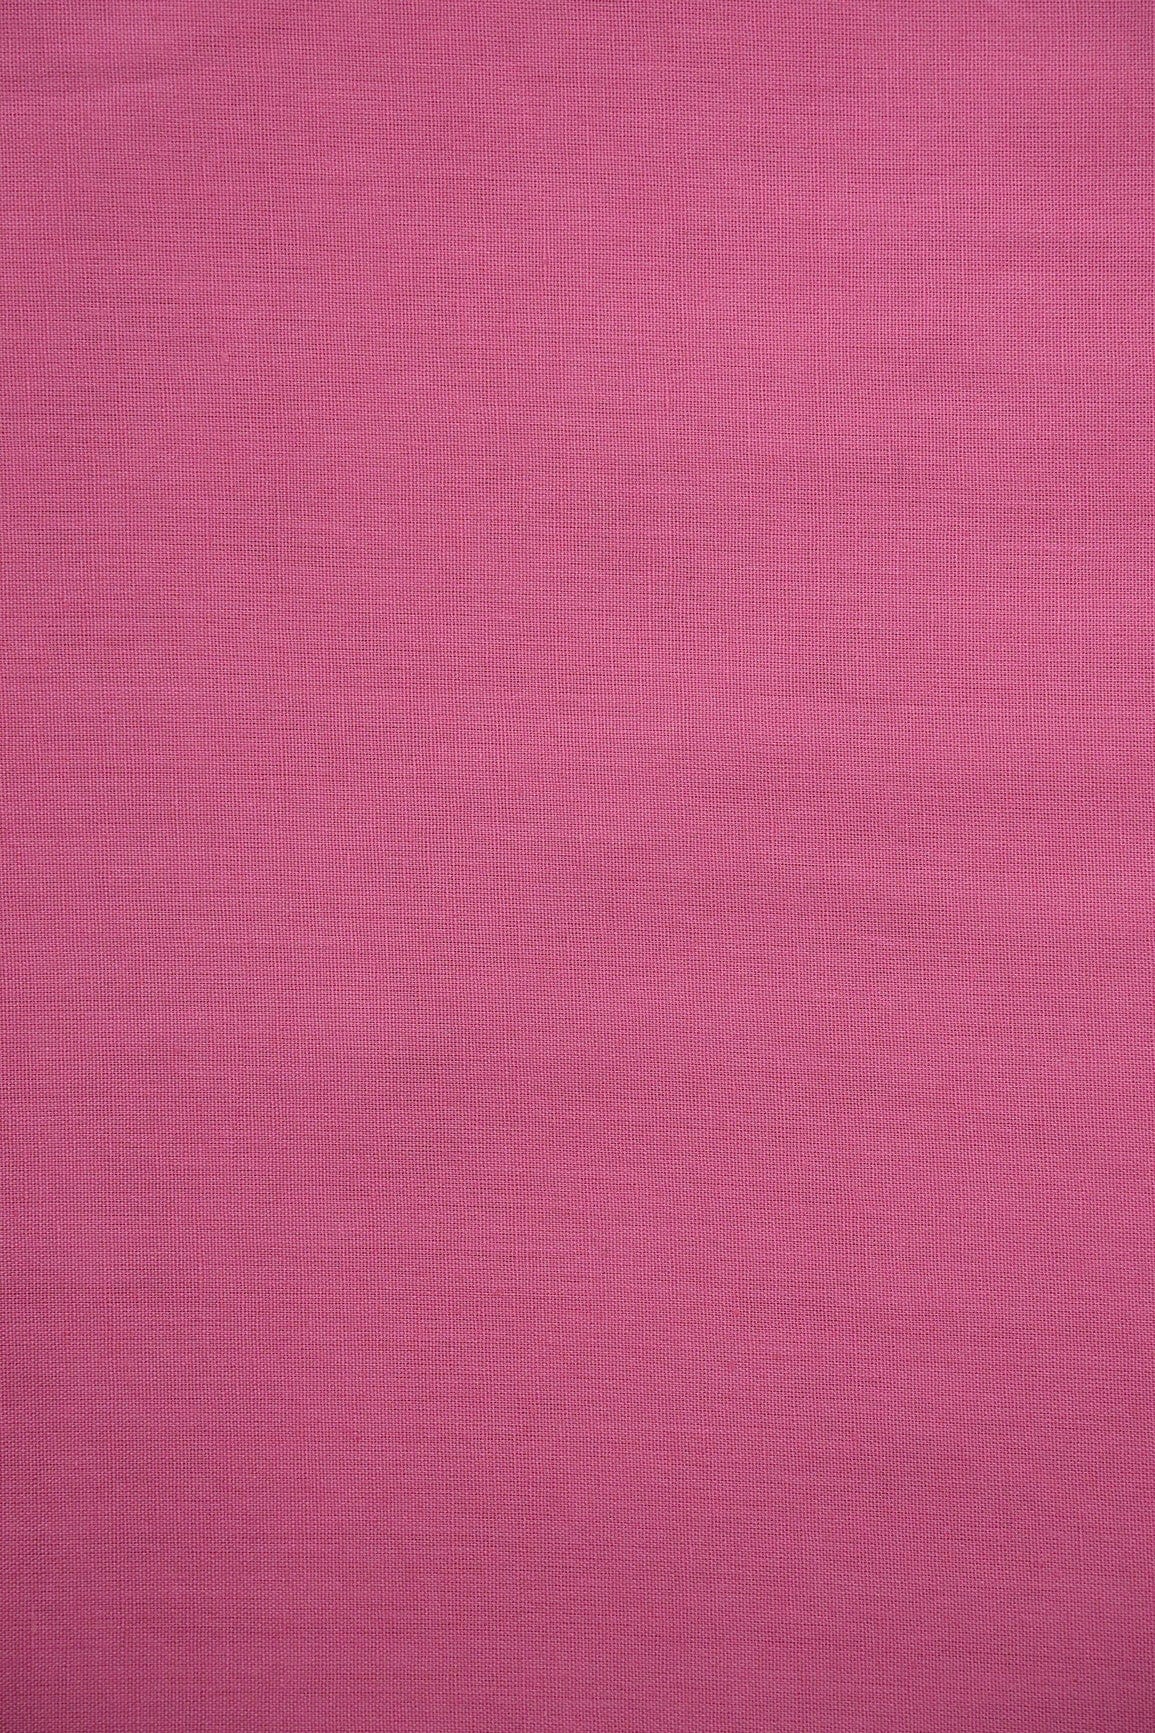 doeraa Plain Fabrics Baby Pink Dyed Flex Cotton Fabric